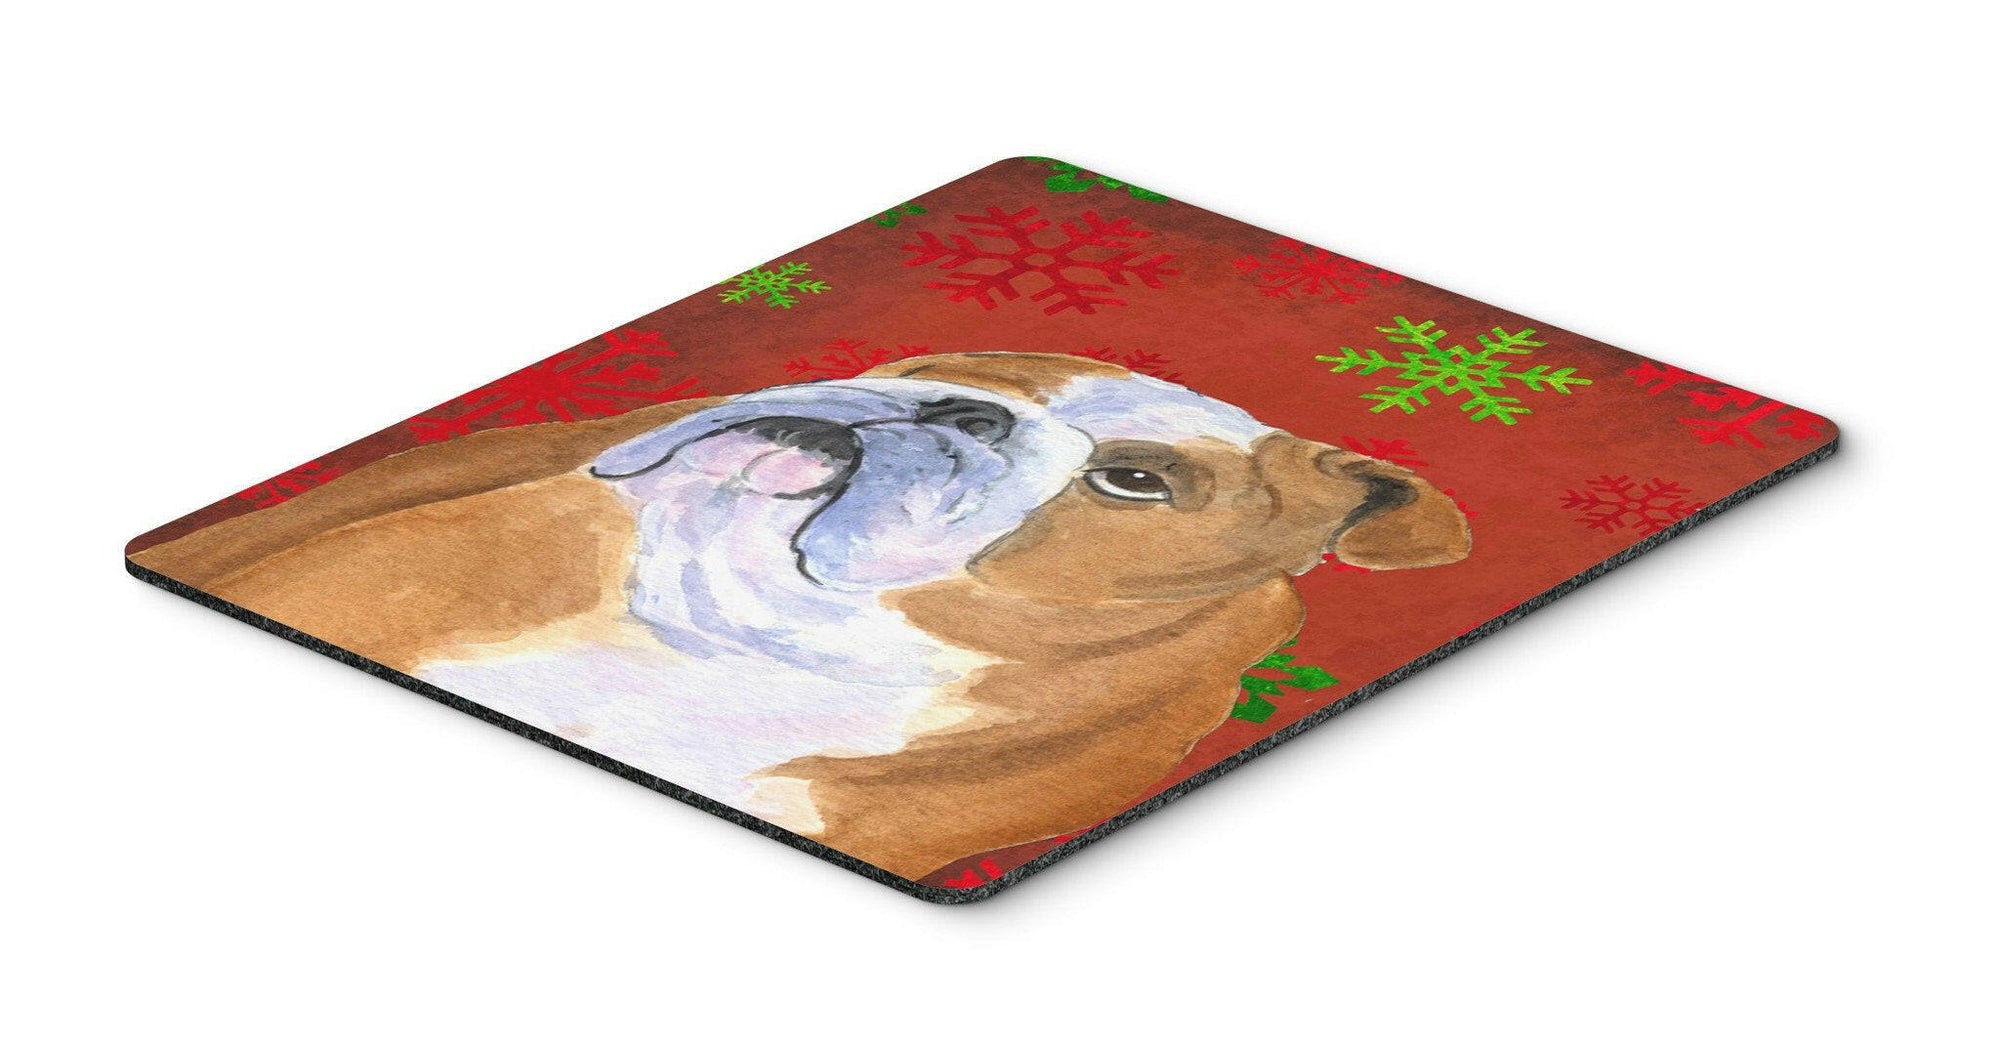 Bulldog English Red and Green Snowflakes Christmas Mouse Pad, Hot Pad or Trivet by Caroline's Treasures